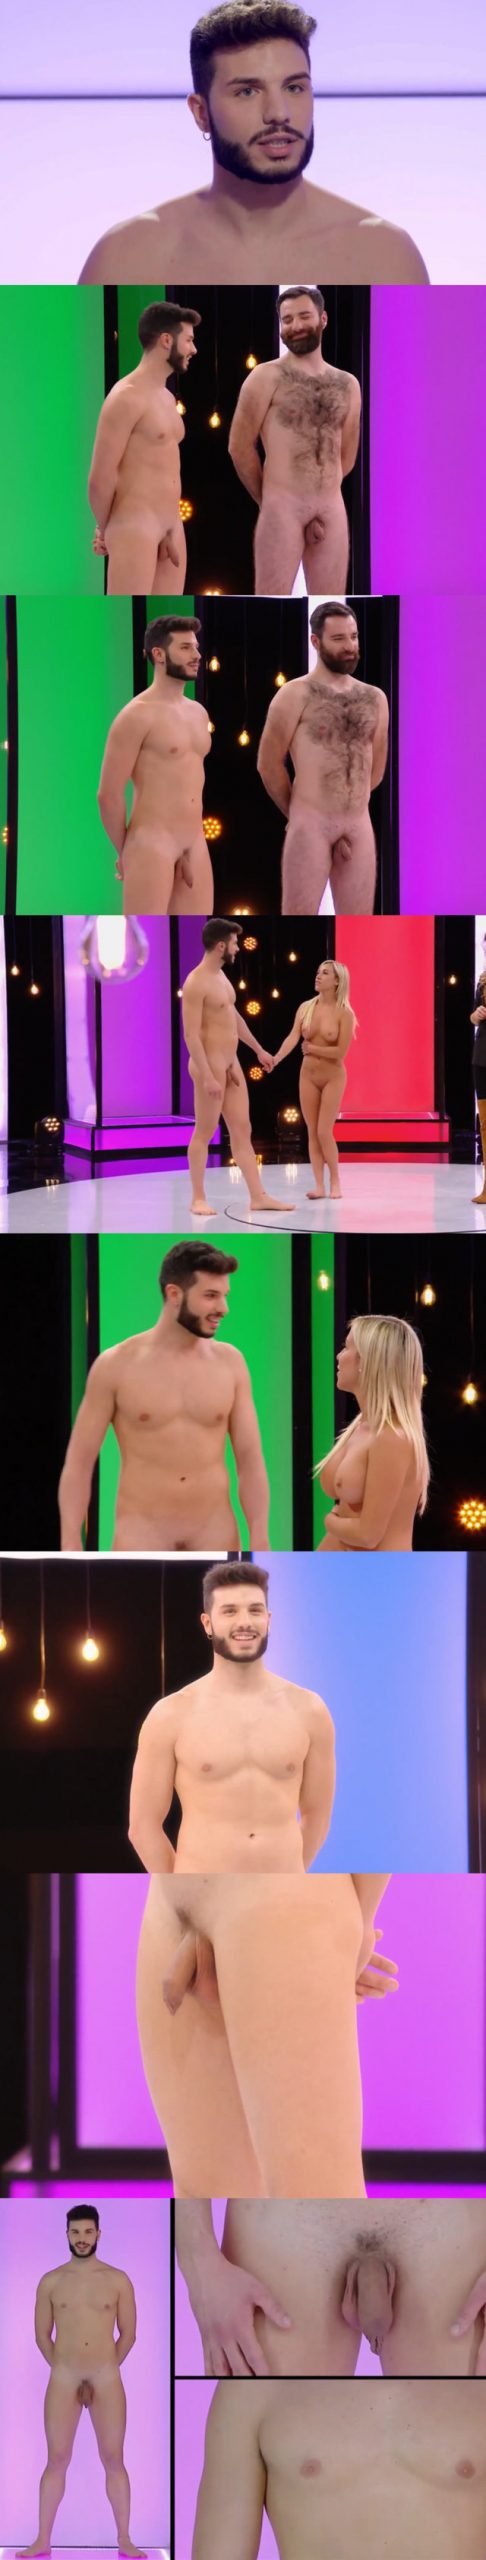 straight italian guy naked attraction